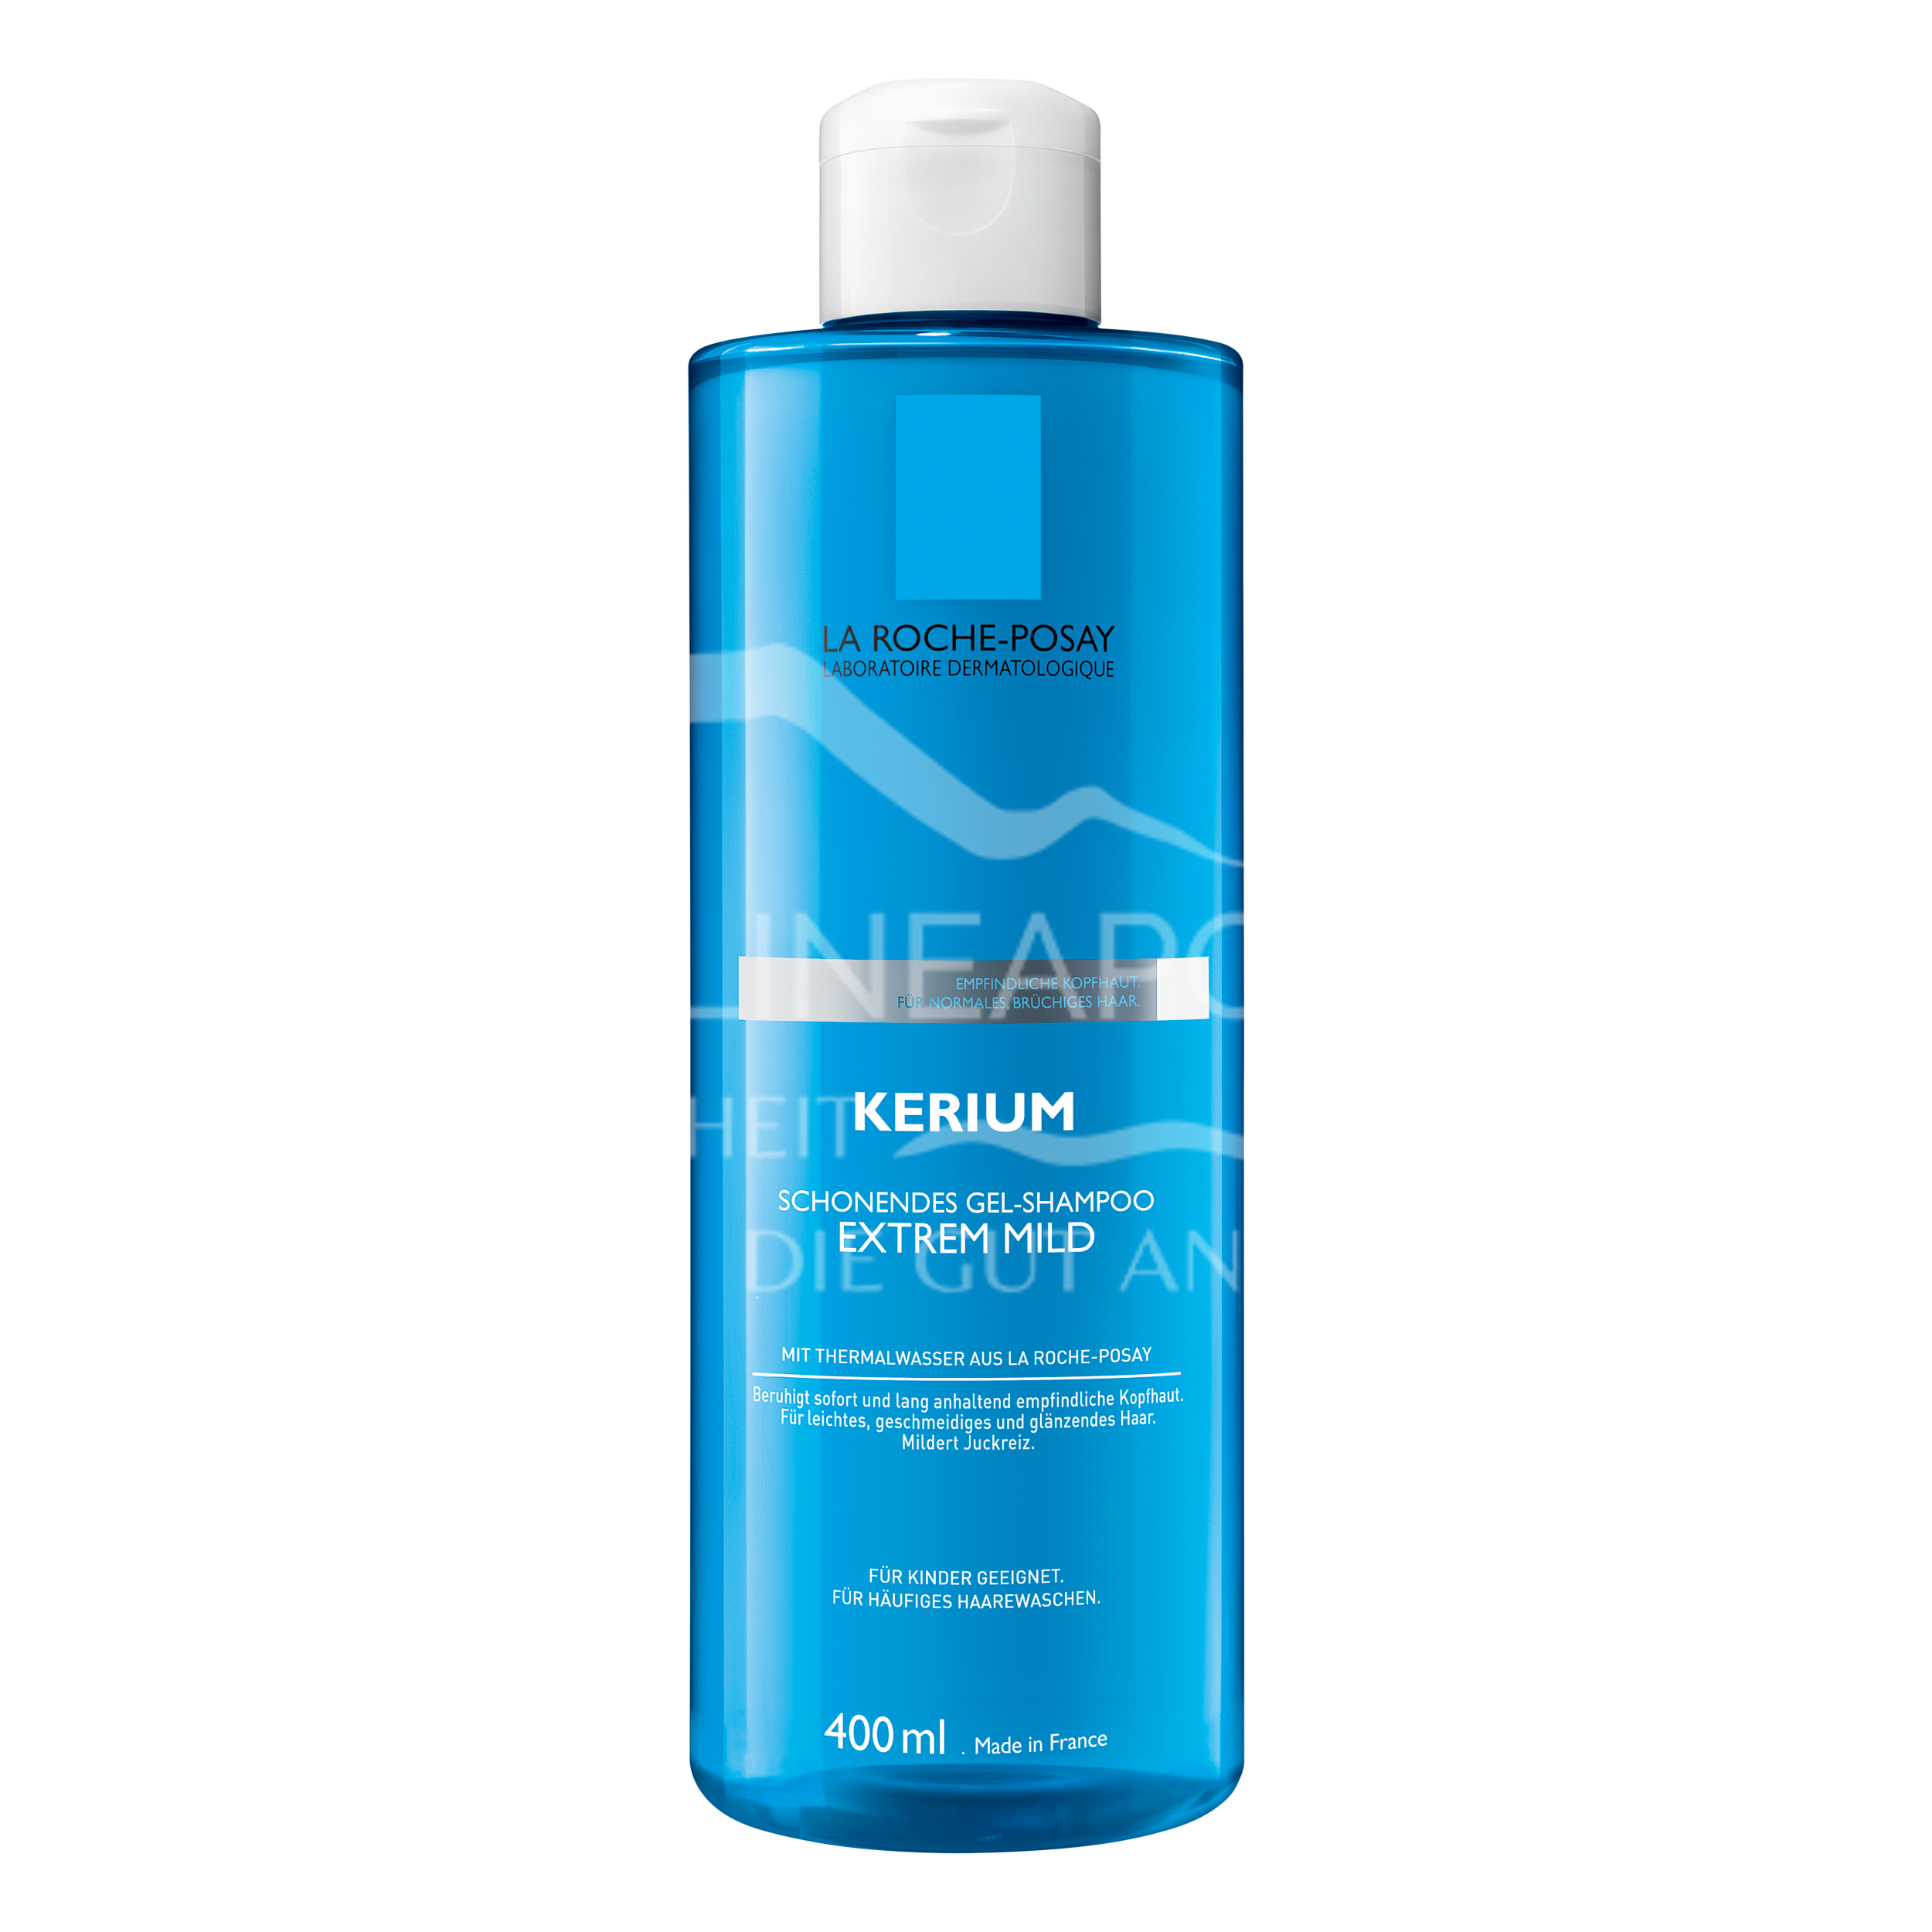 La Roche-Posay KERIUM extrem mild Kopfhaut schonendes Gel-Shampoo